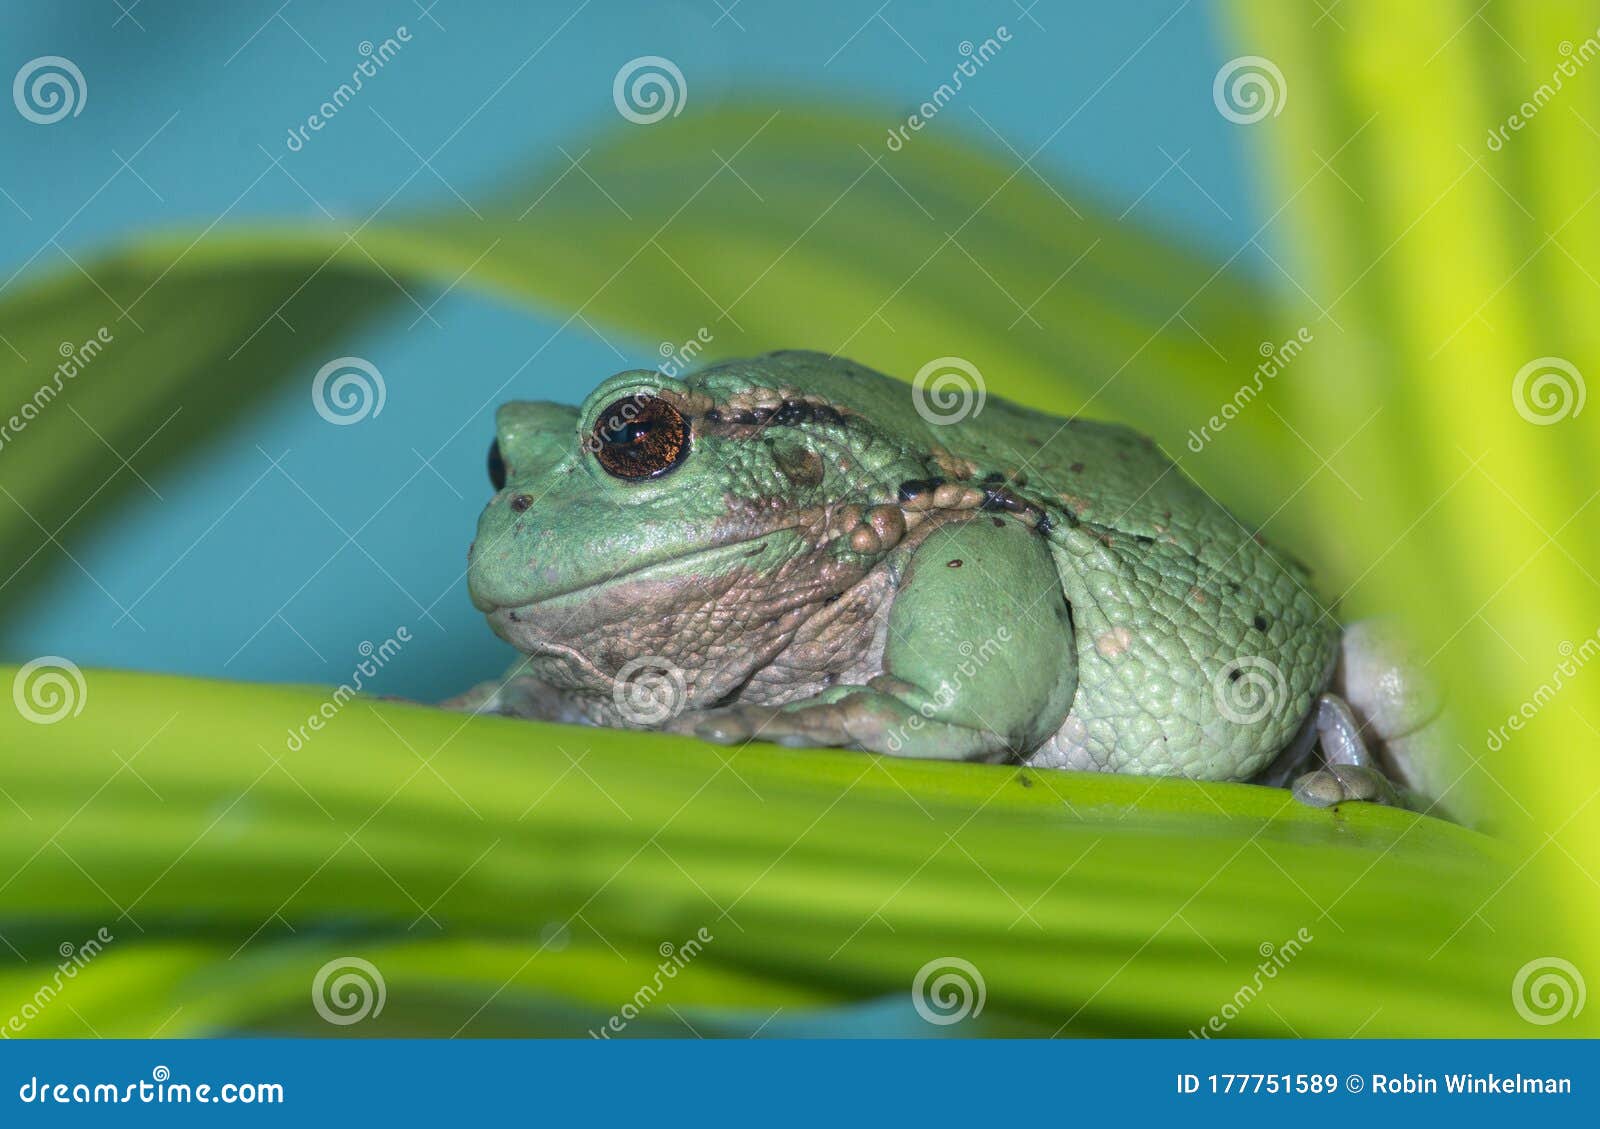 andean marsupial frog 3